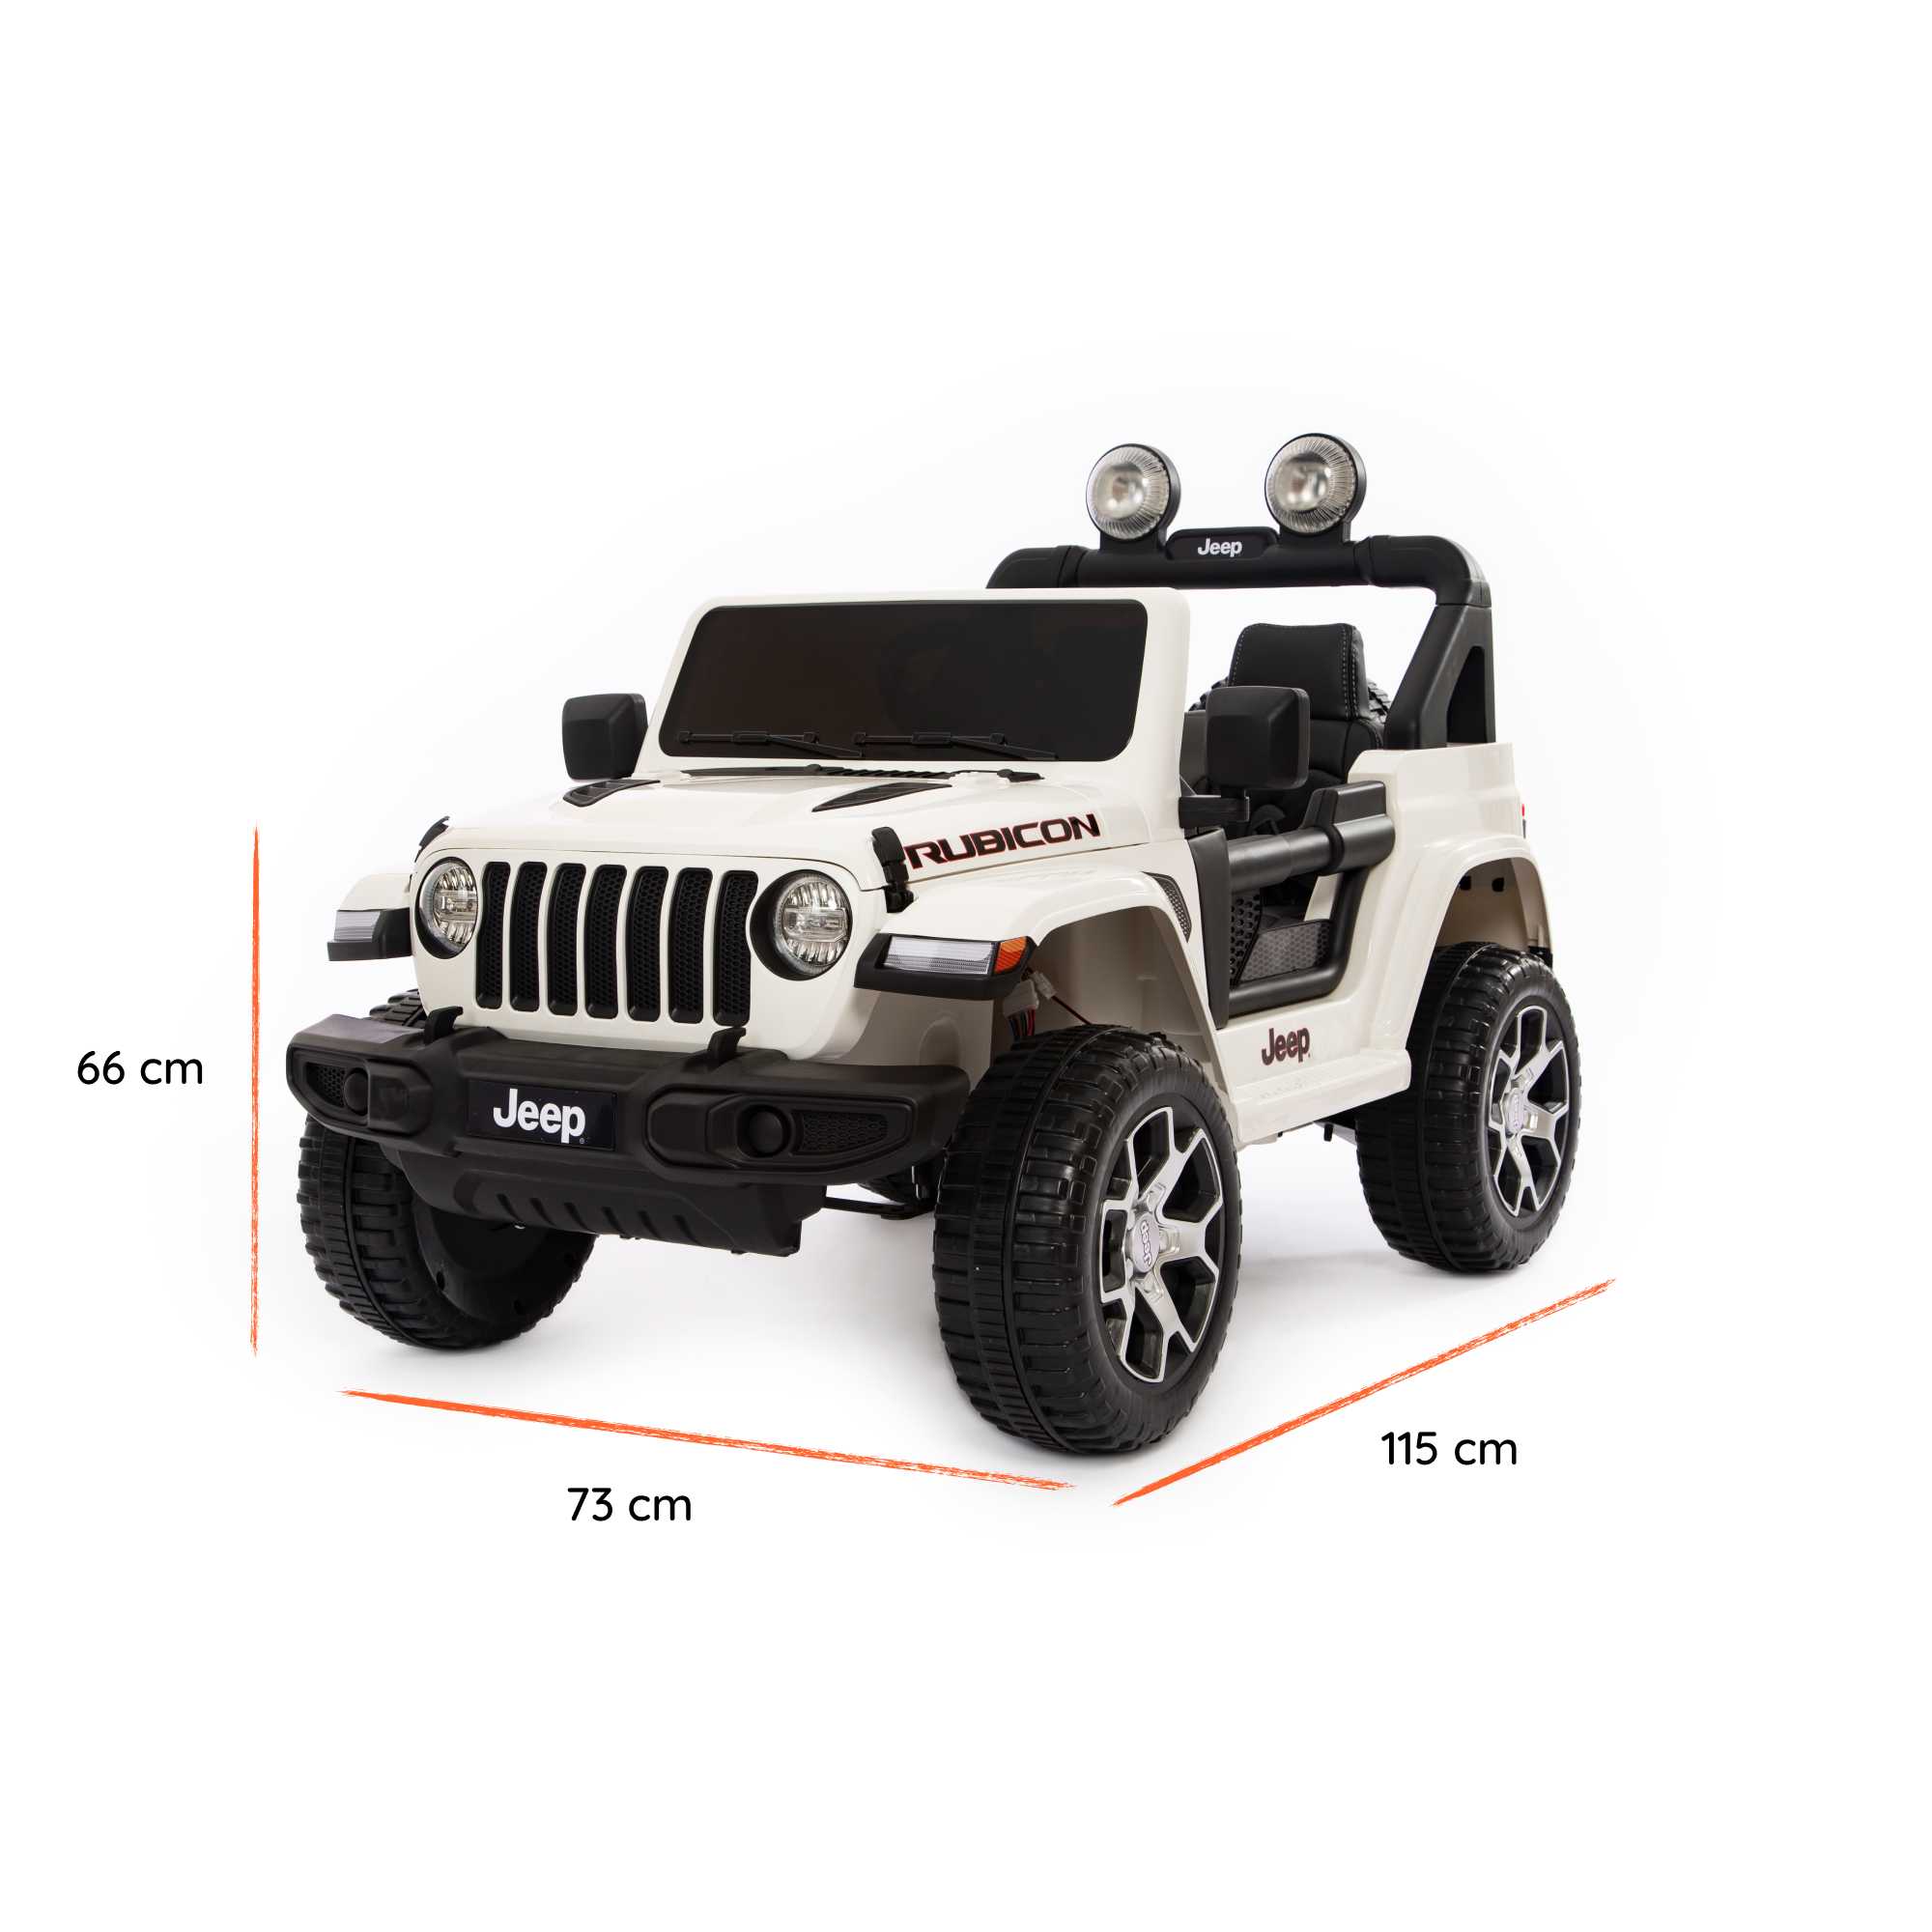 Jeep Wrangler Blanco dimensiones